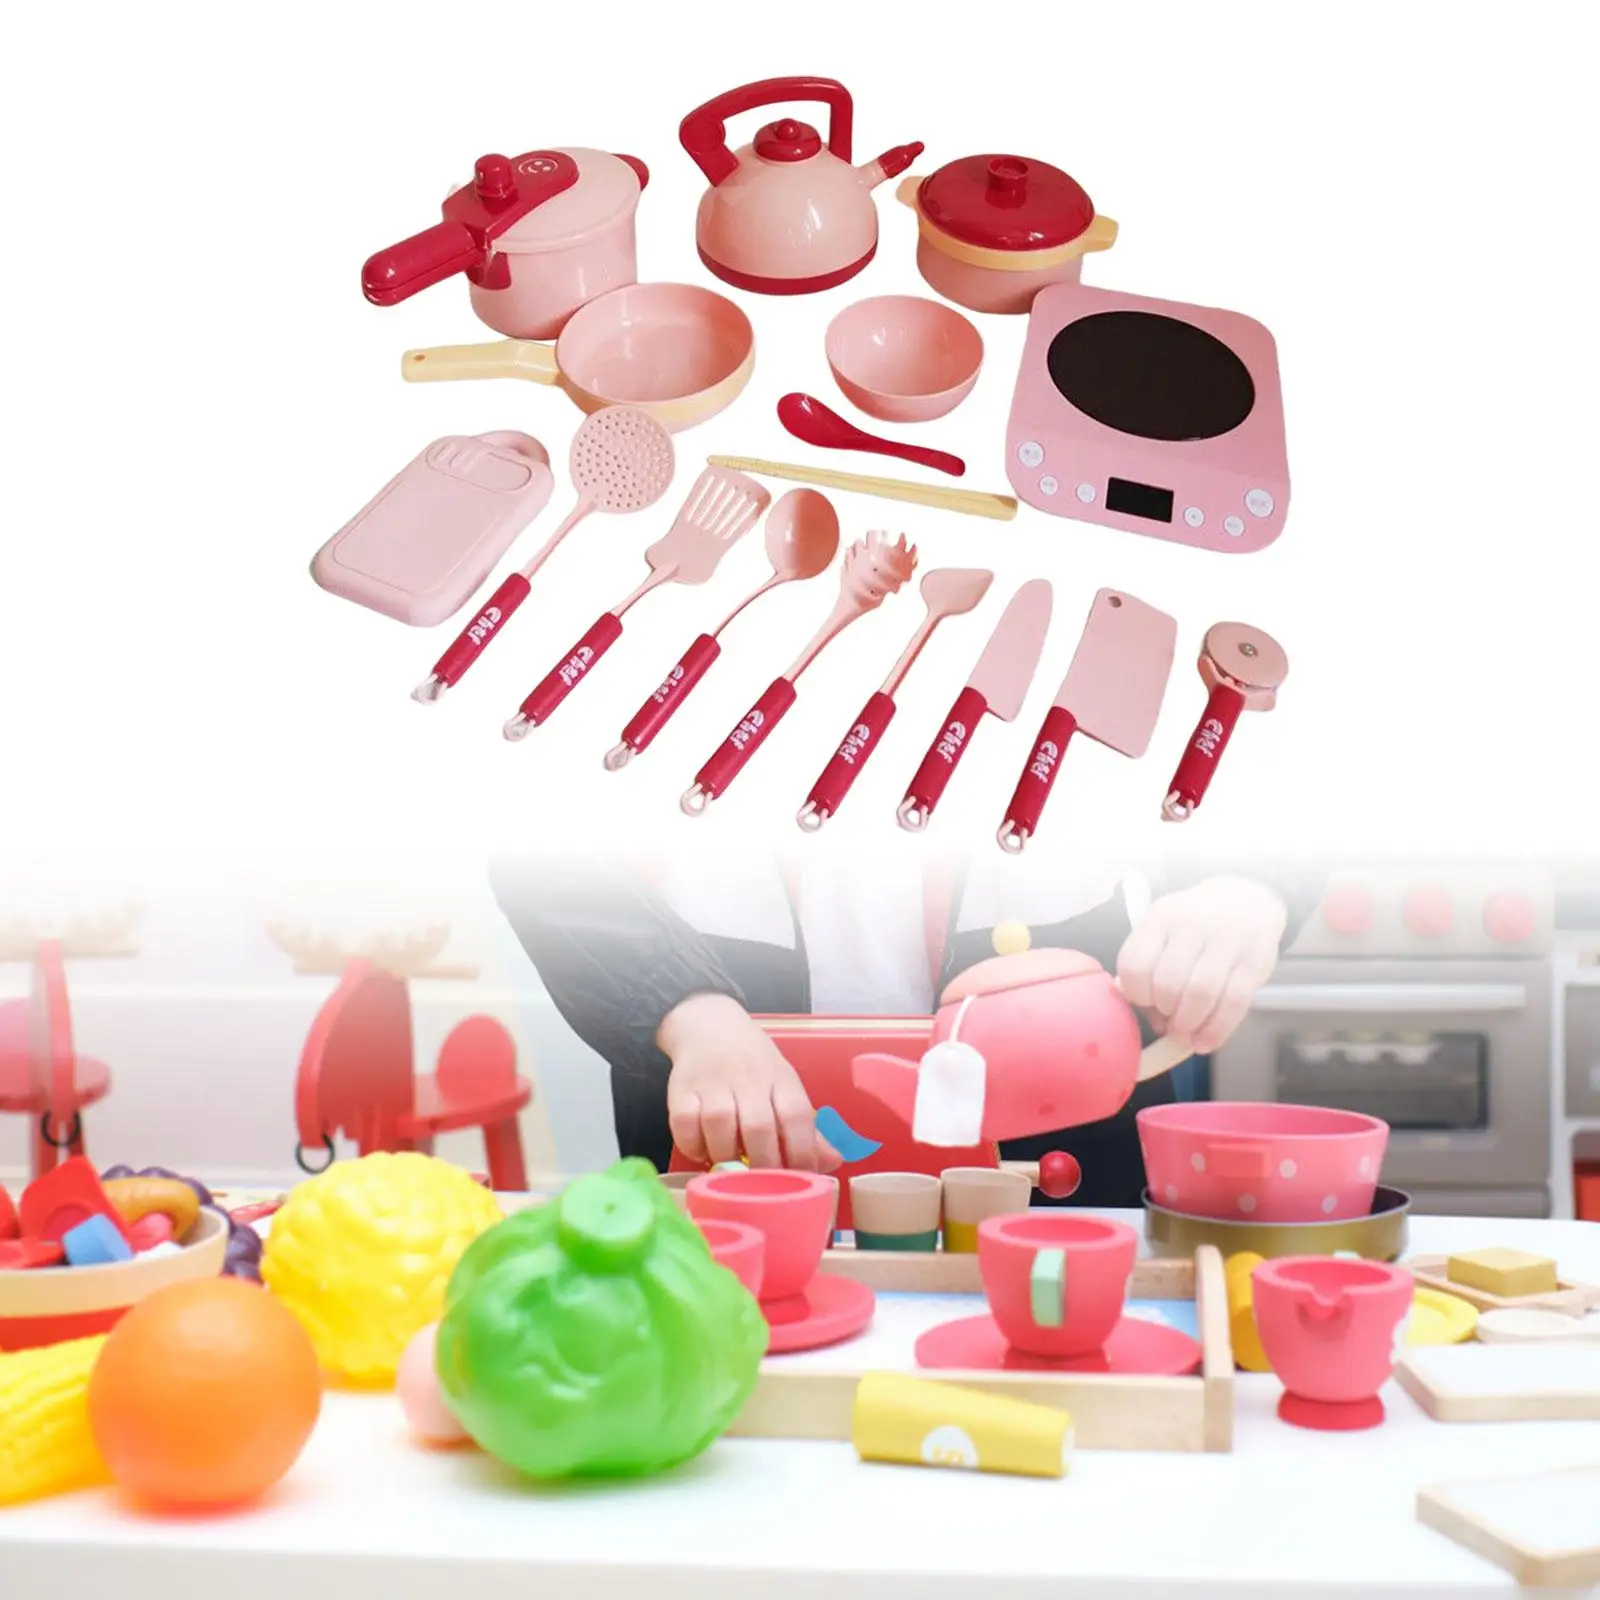 17 Pieces Kitchen Accessories Set Cooking Utensils Toys for Children